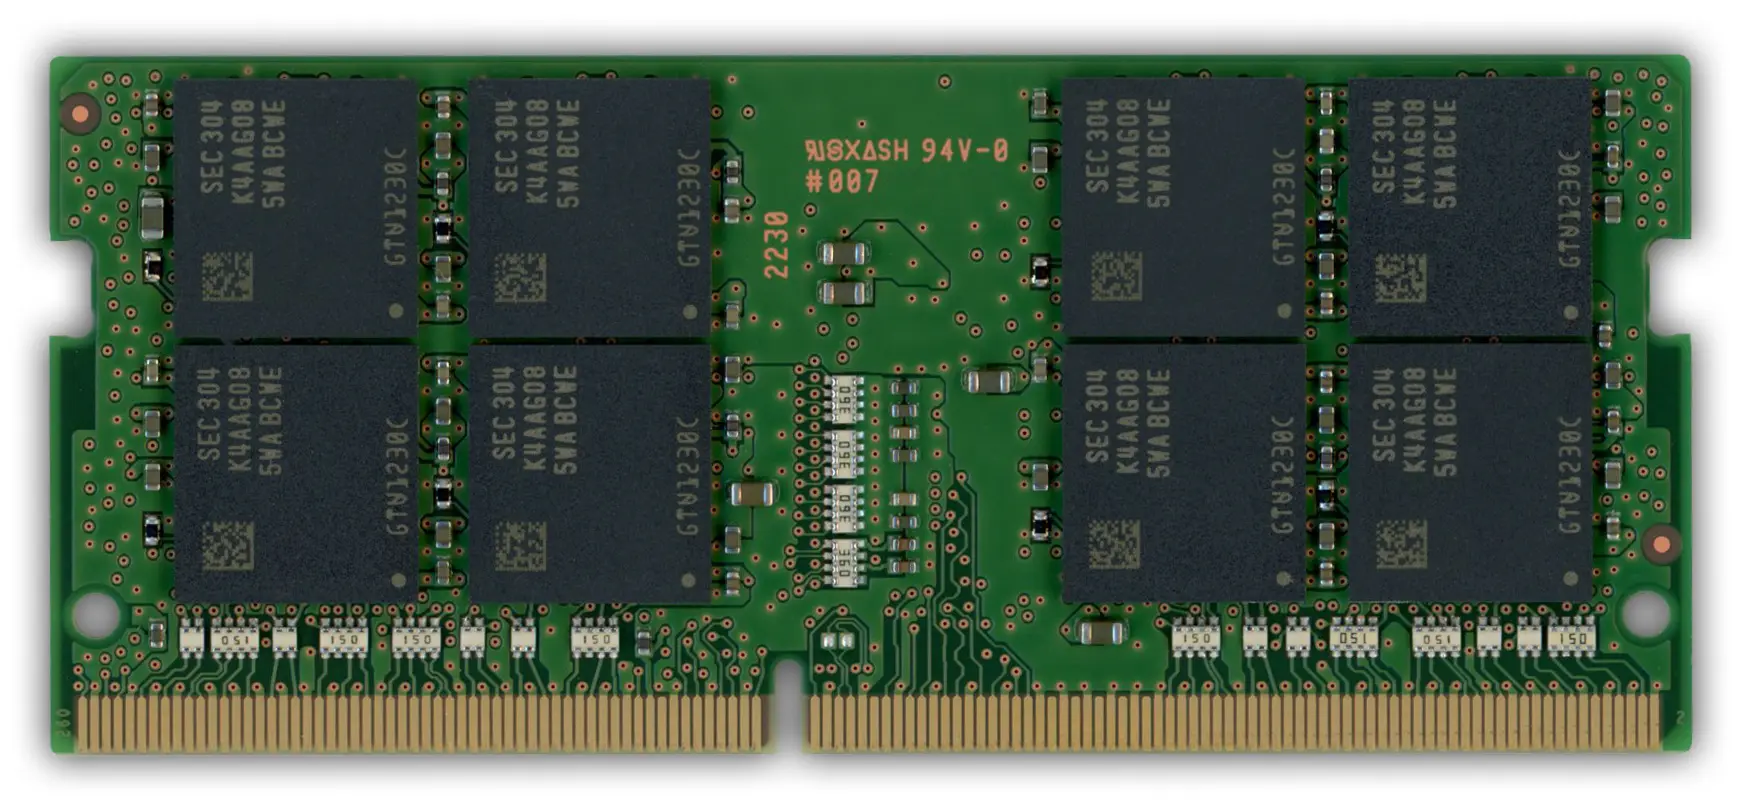 Samsung 32GB RAM-Modul DDR4 3200 MT/s PC4-3200AA-S SODIMM